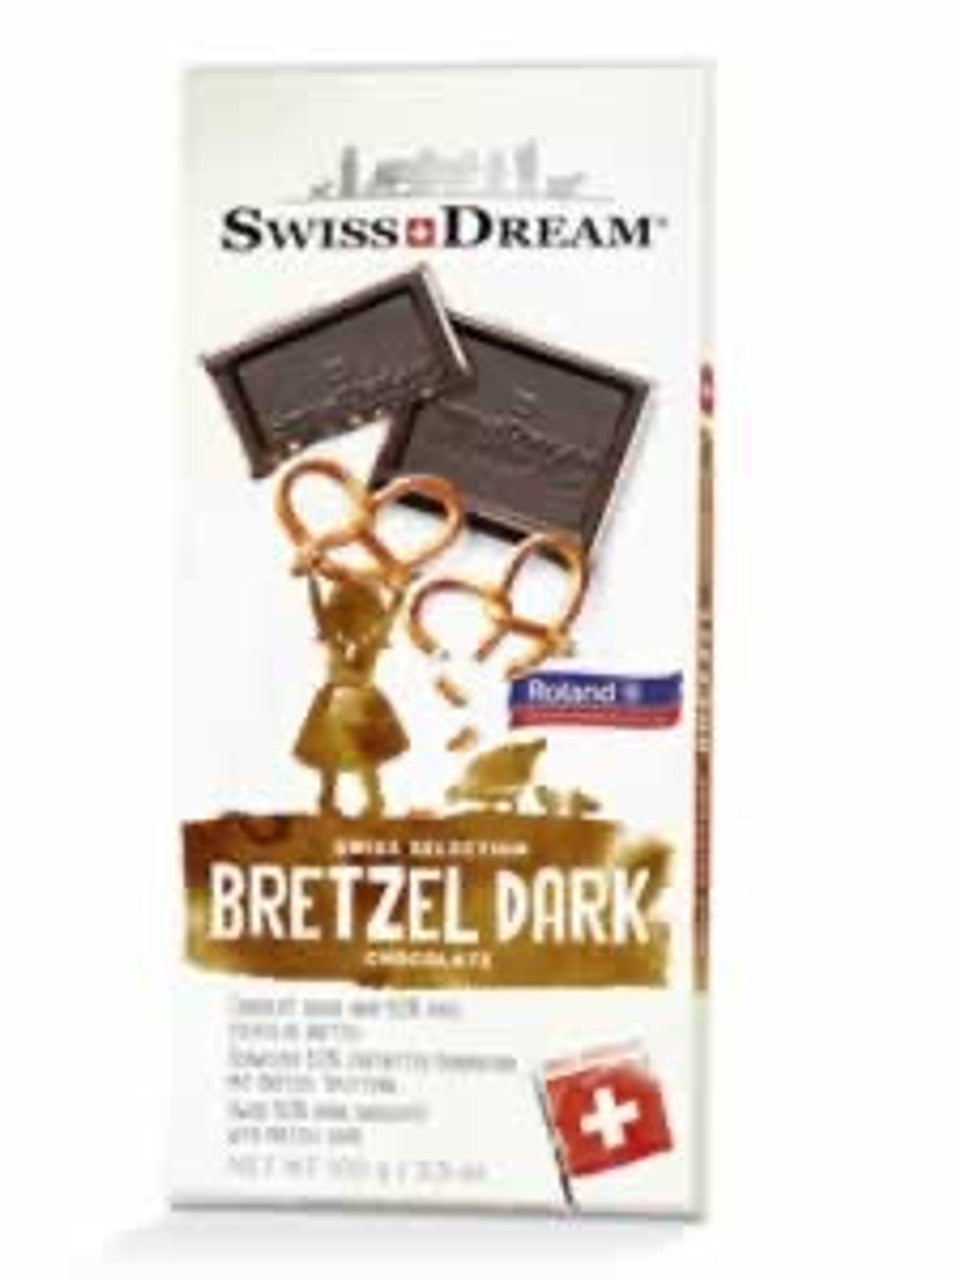 Swiss Dream Bretzel Dark Chocolate Bar 3.5oz